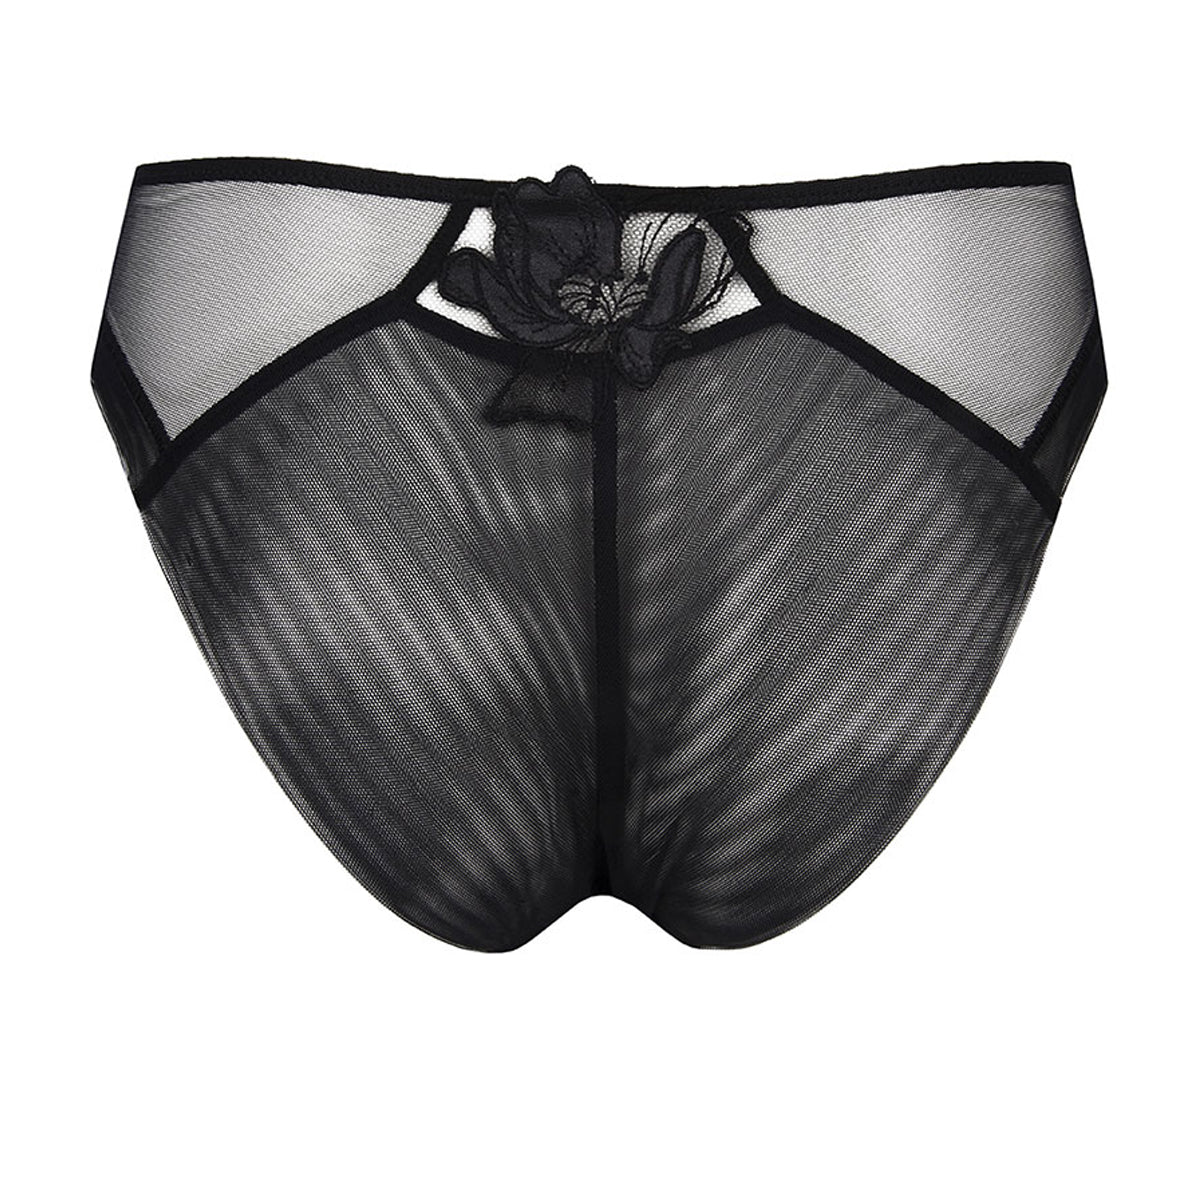 Lise Charmel Lingerie Follement Sexy Push-up Bra nude/black ACH8545 -  Italian Design Fashion & Beauty